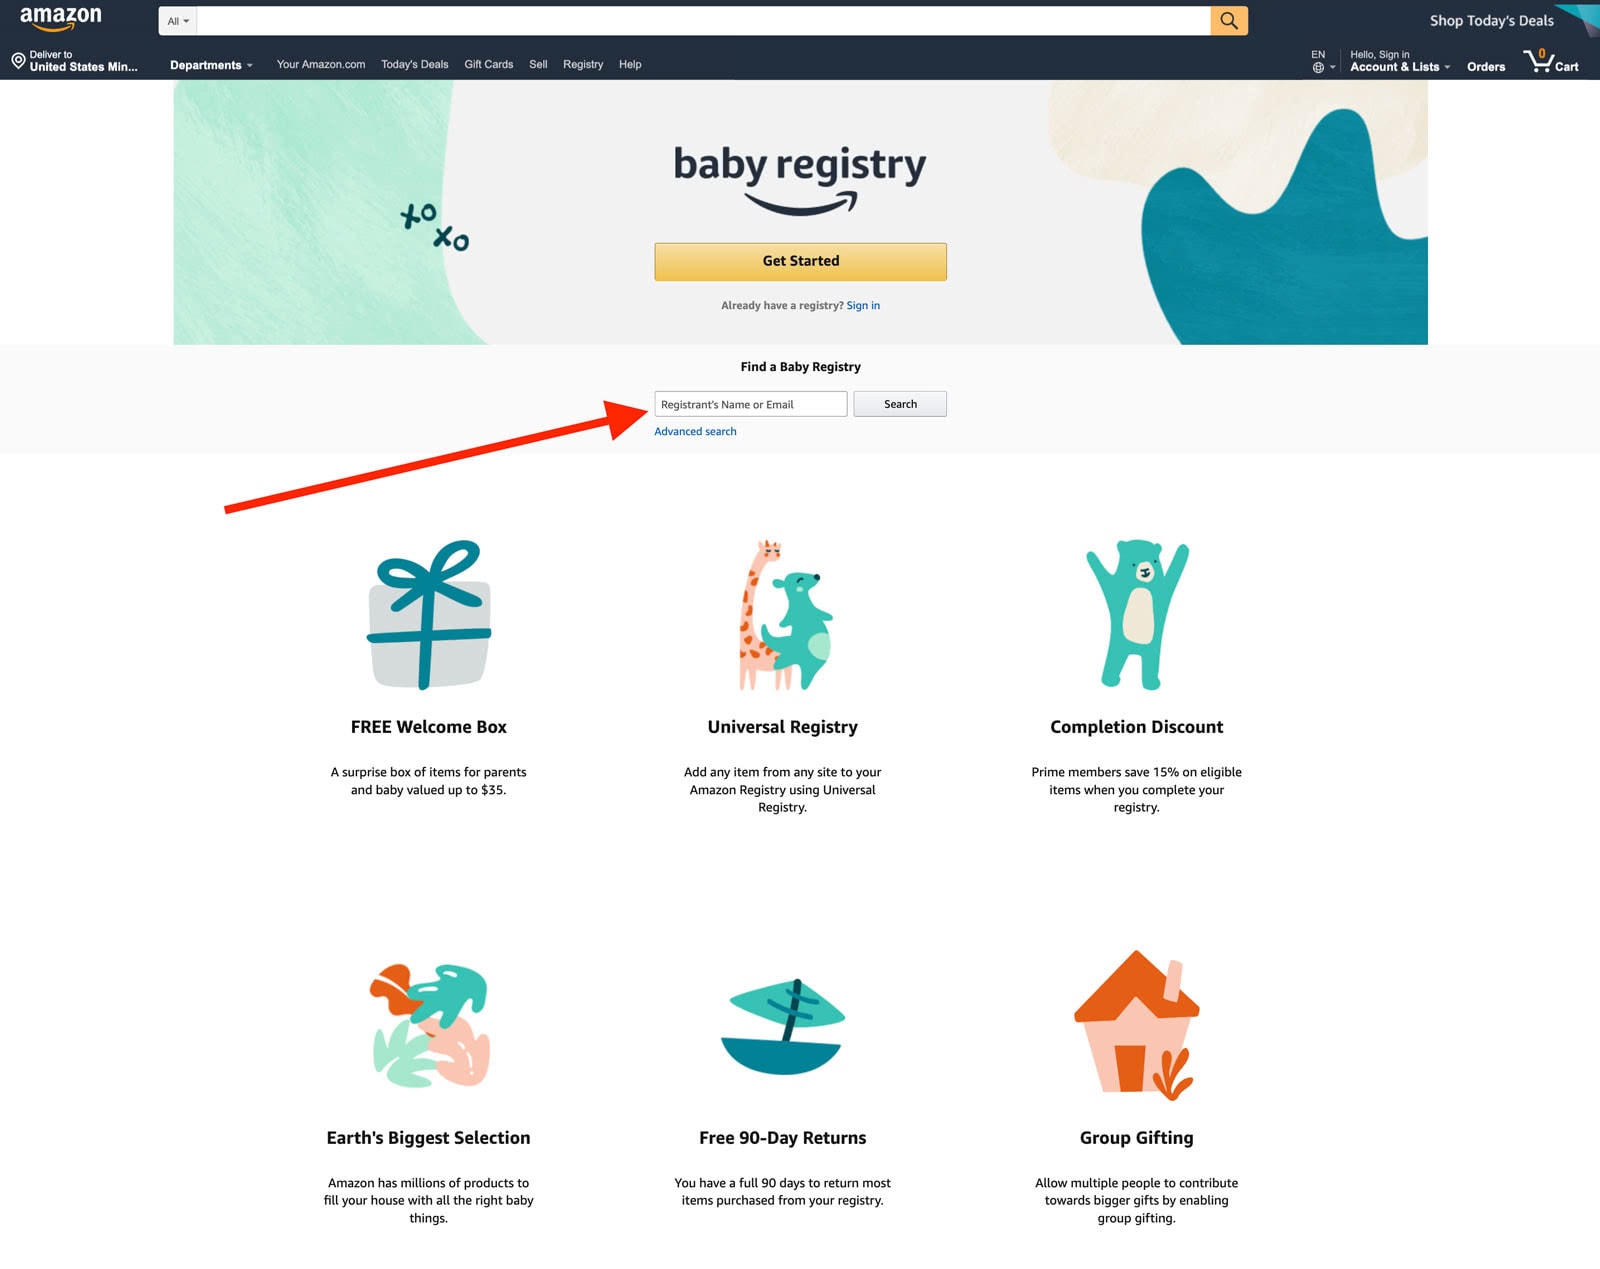 Amazon Baby Registry guide gift - Baby Gear Essentials